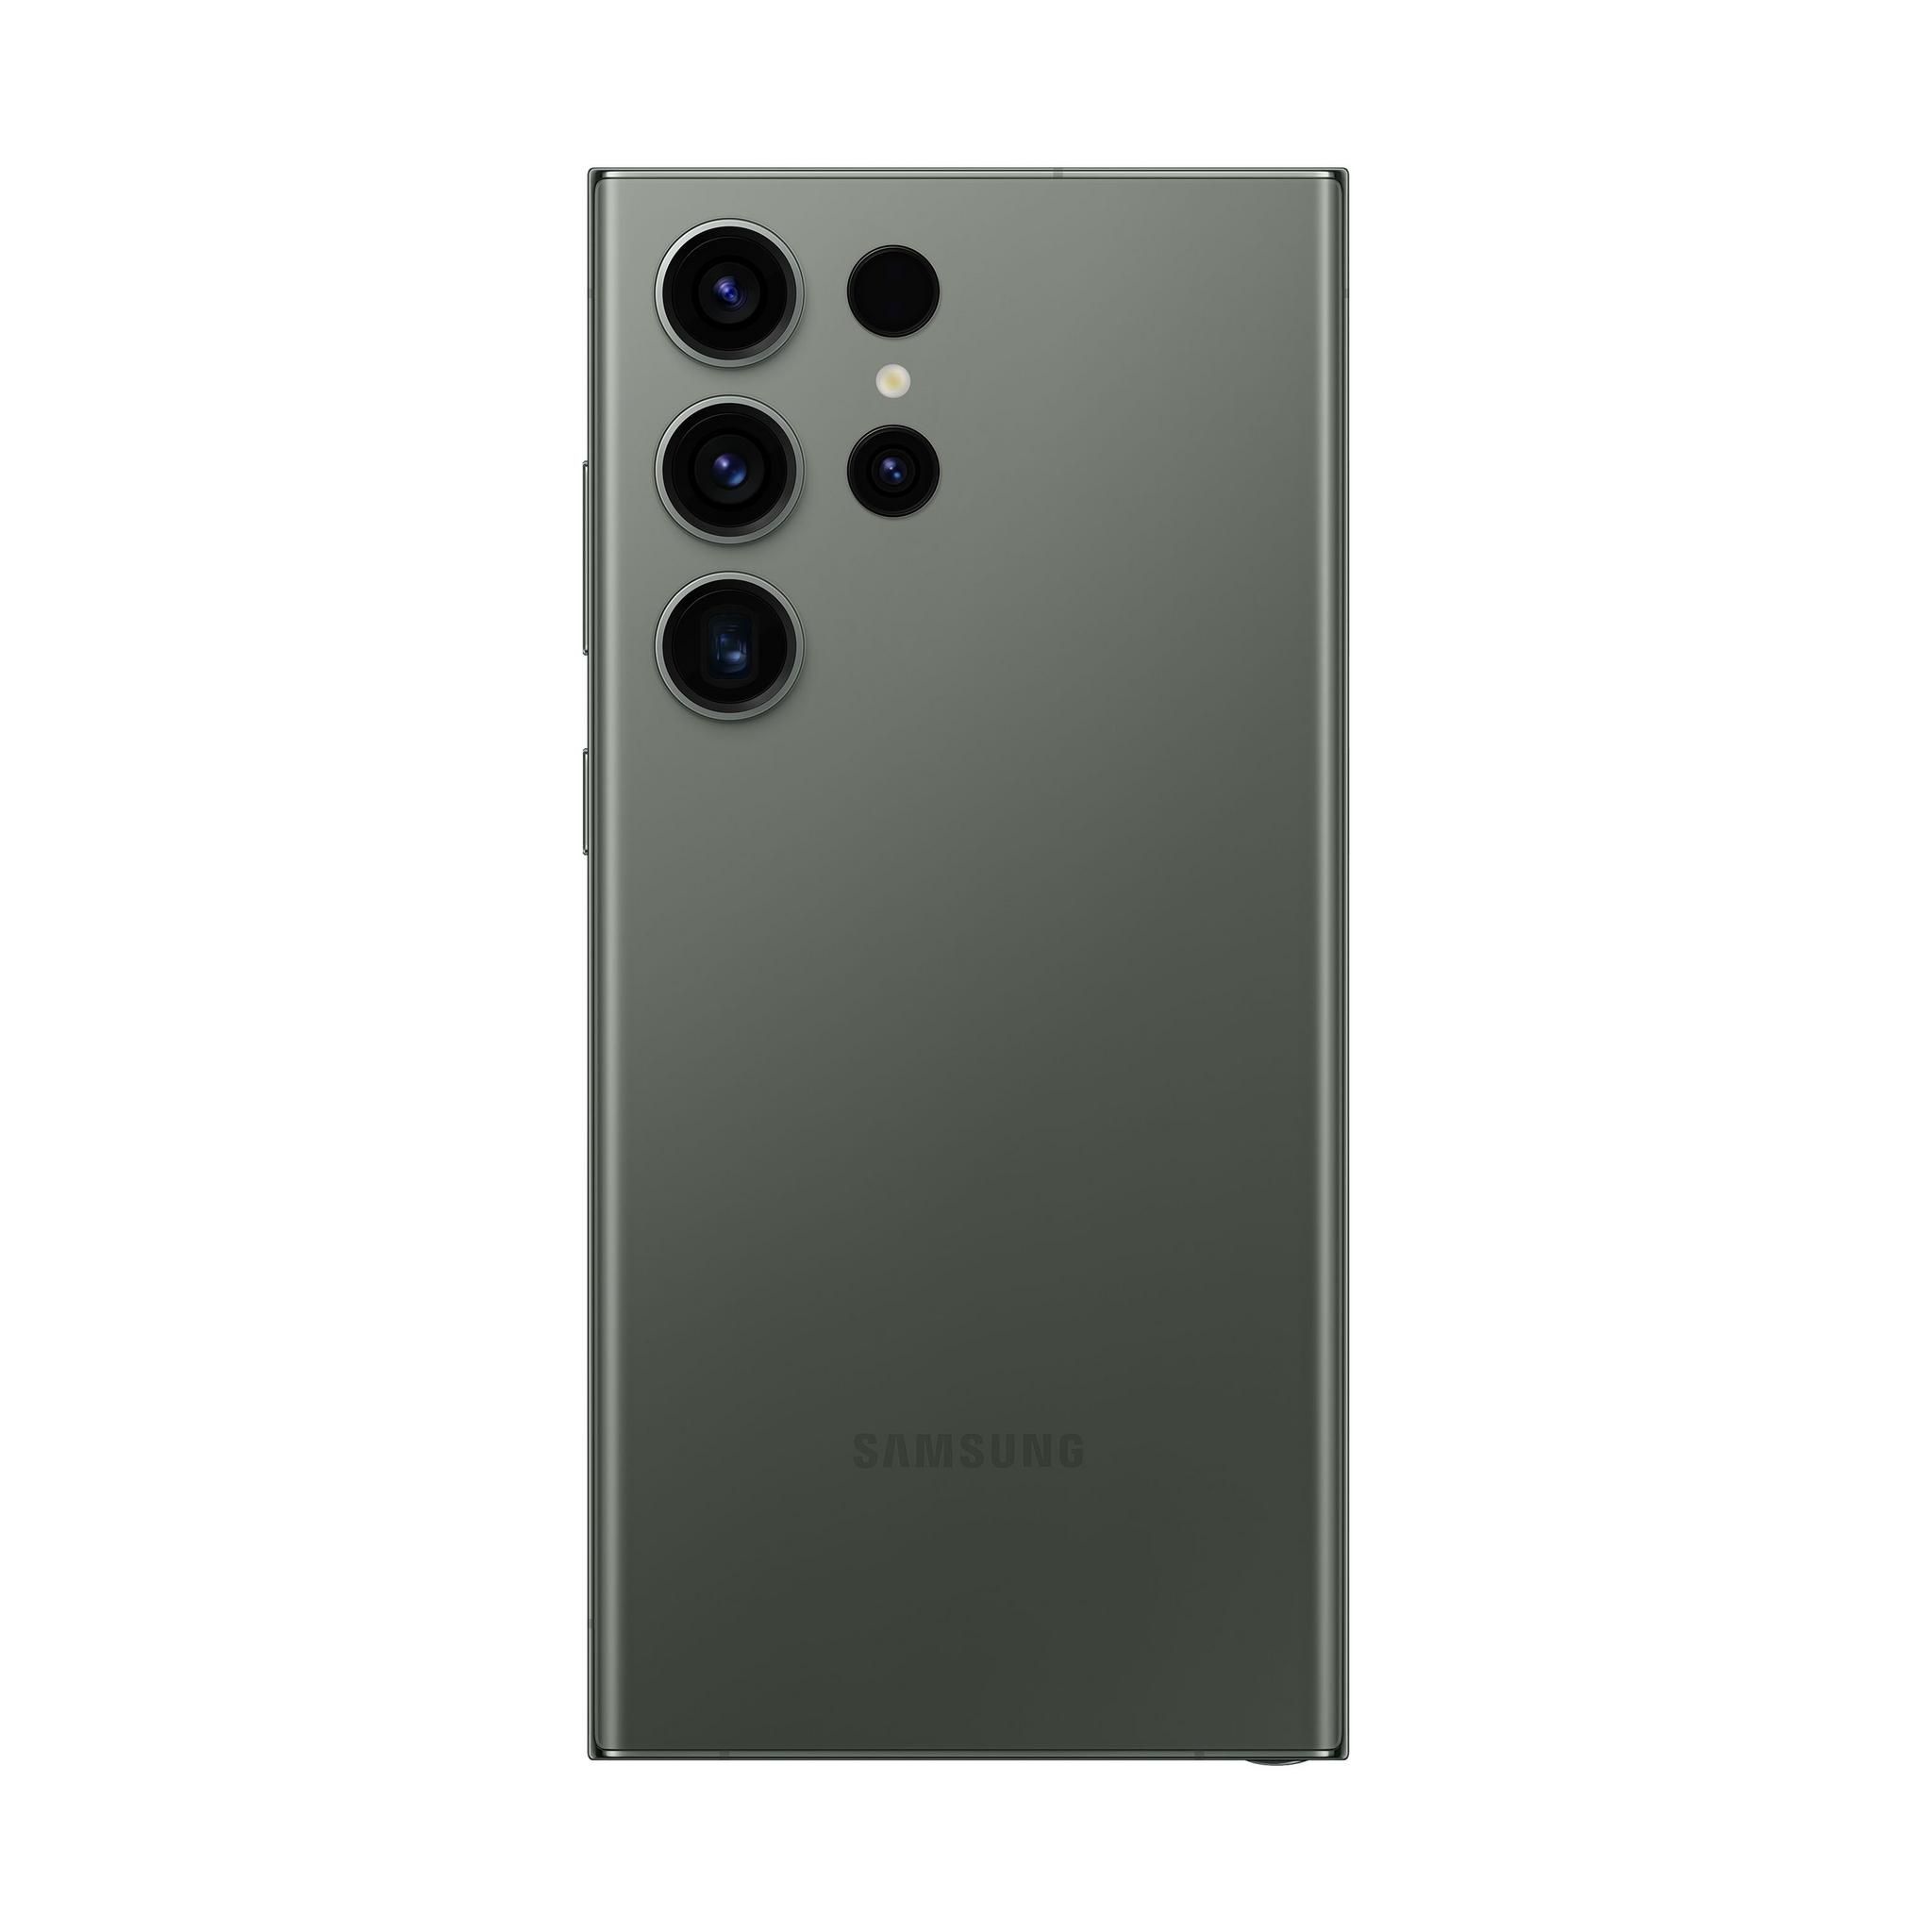 Samsung Galaxy S23 Ultra 1TB Phone - Green